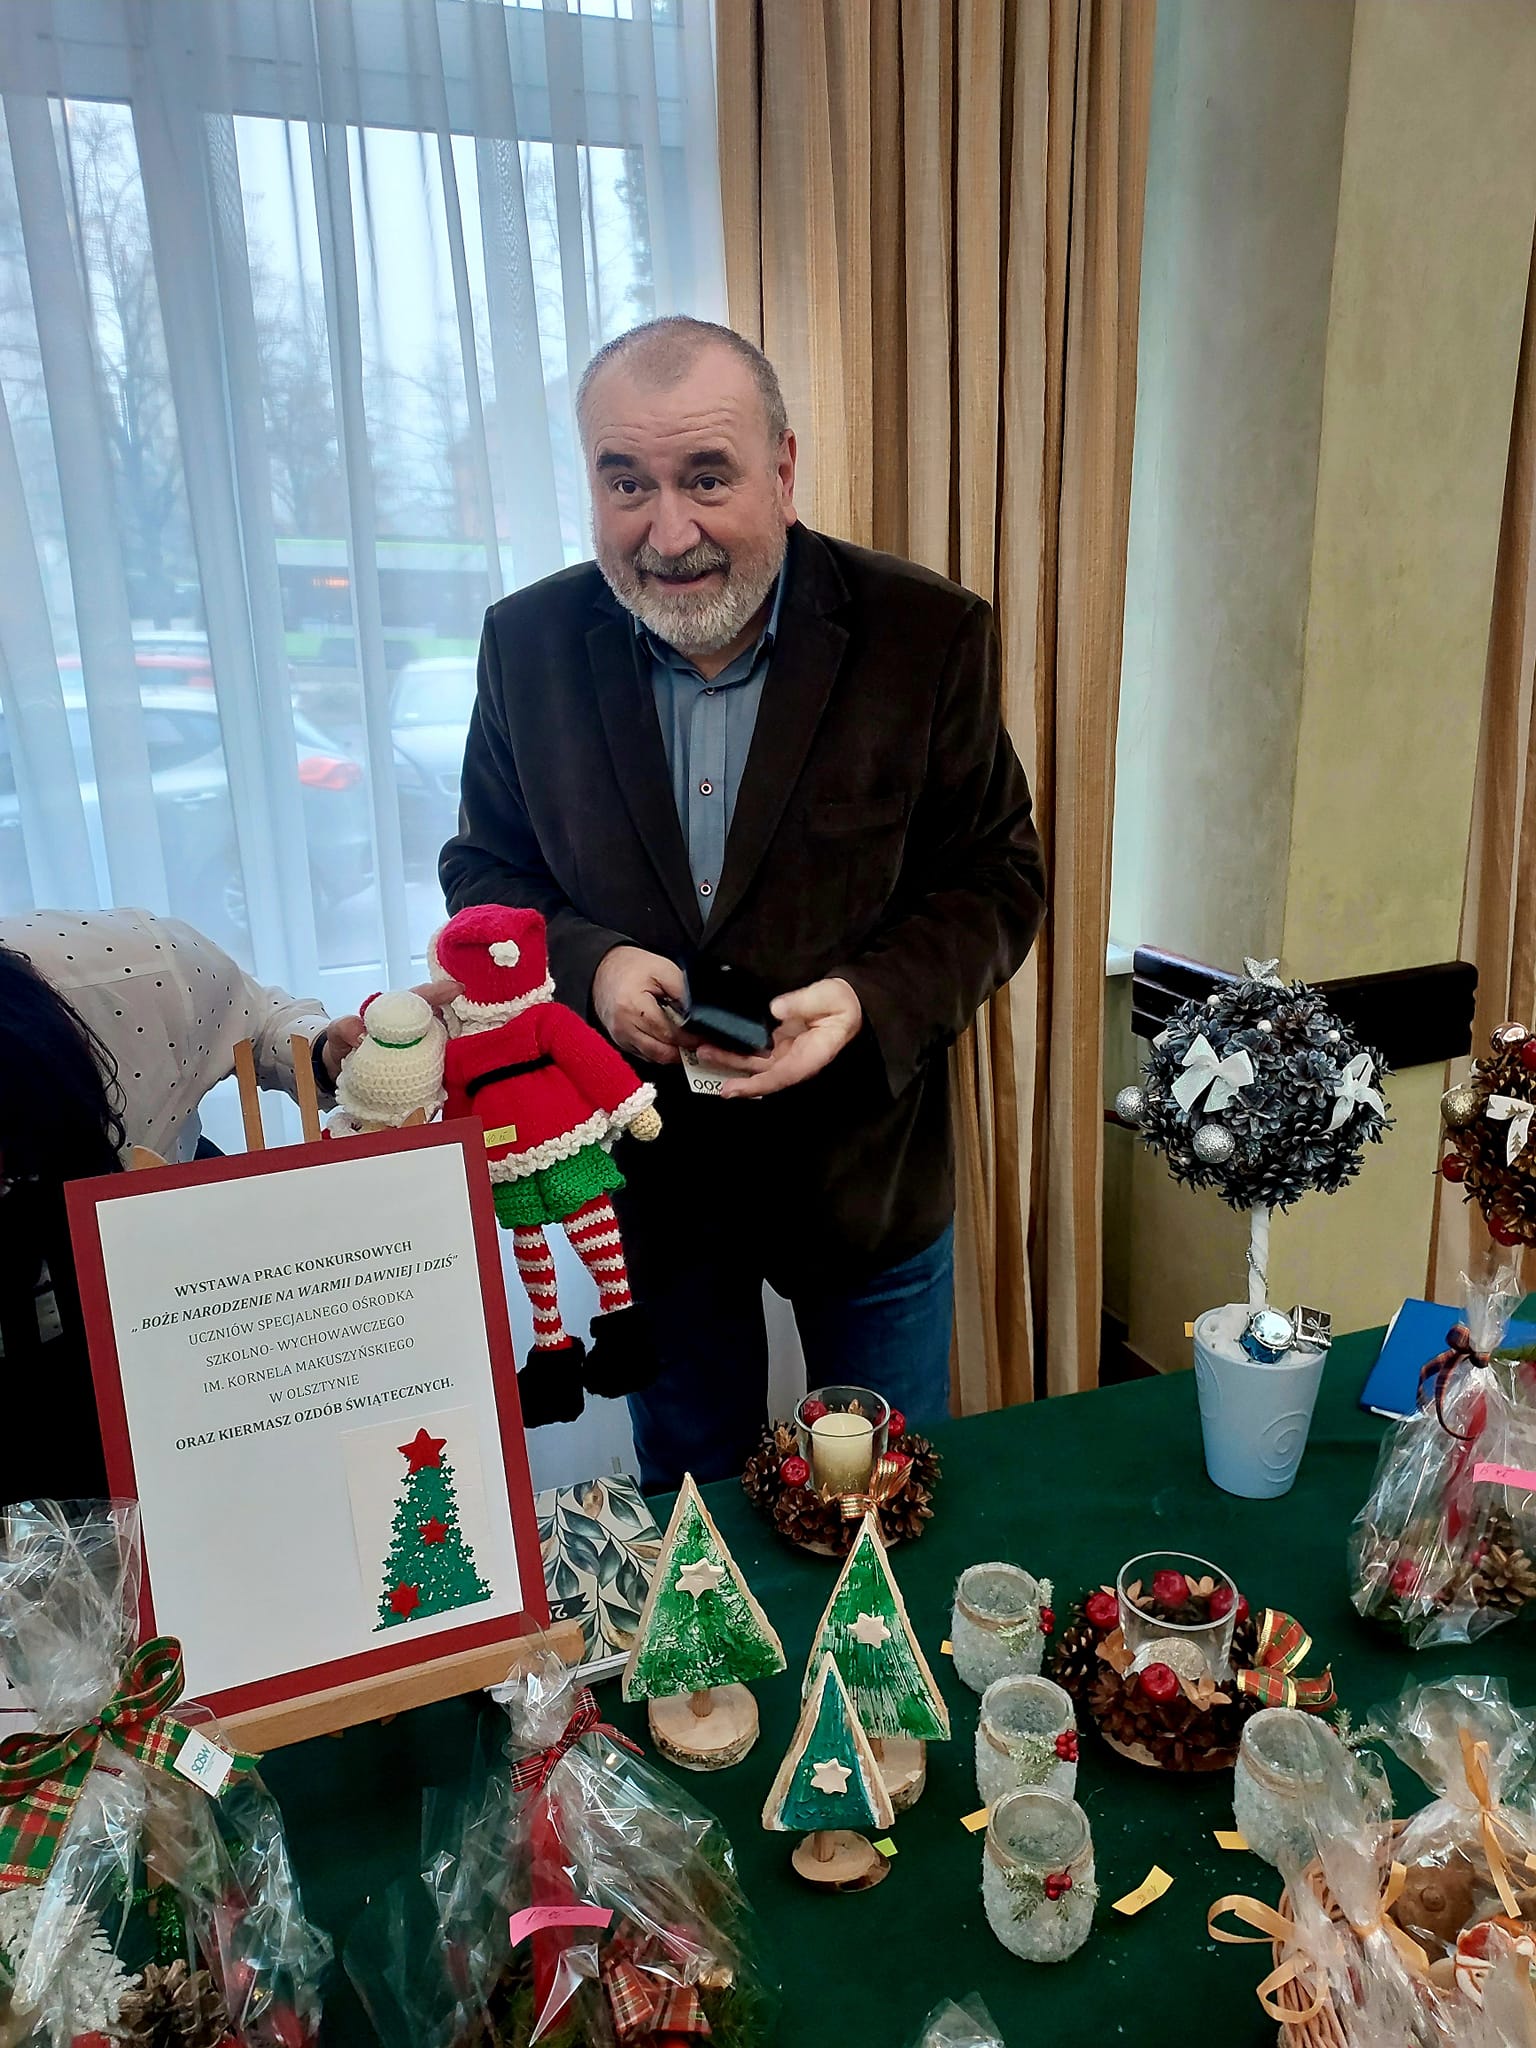 Mr. Director of the School Youth Hostel in Olsztyn buys Christmas decorations.